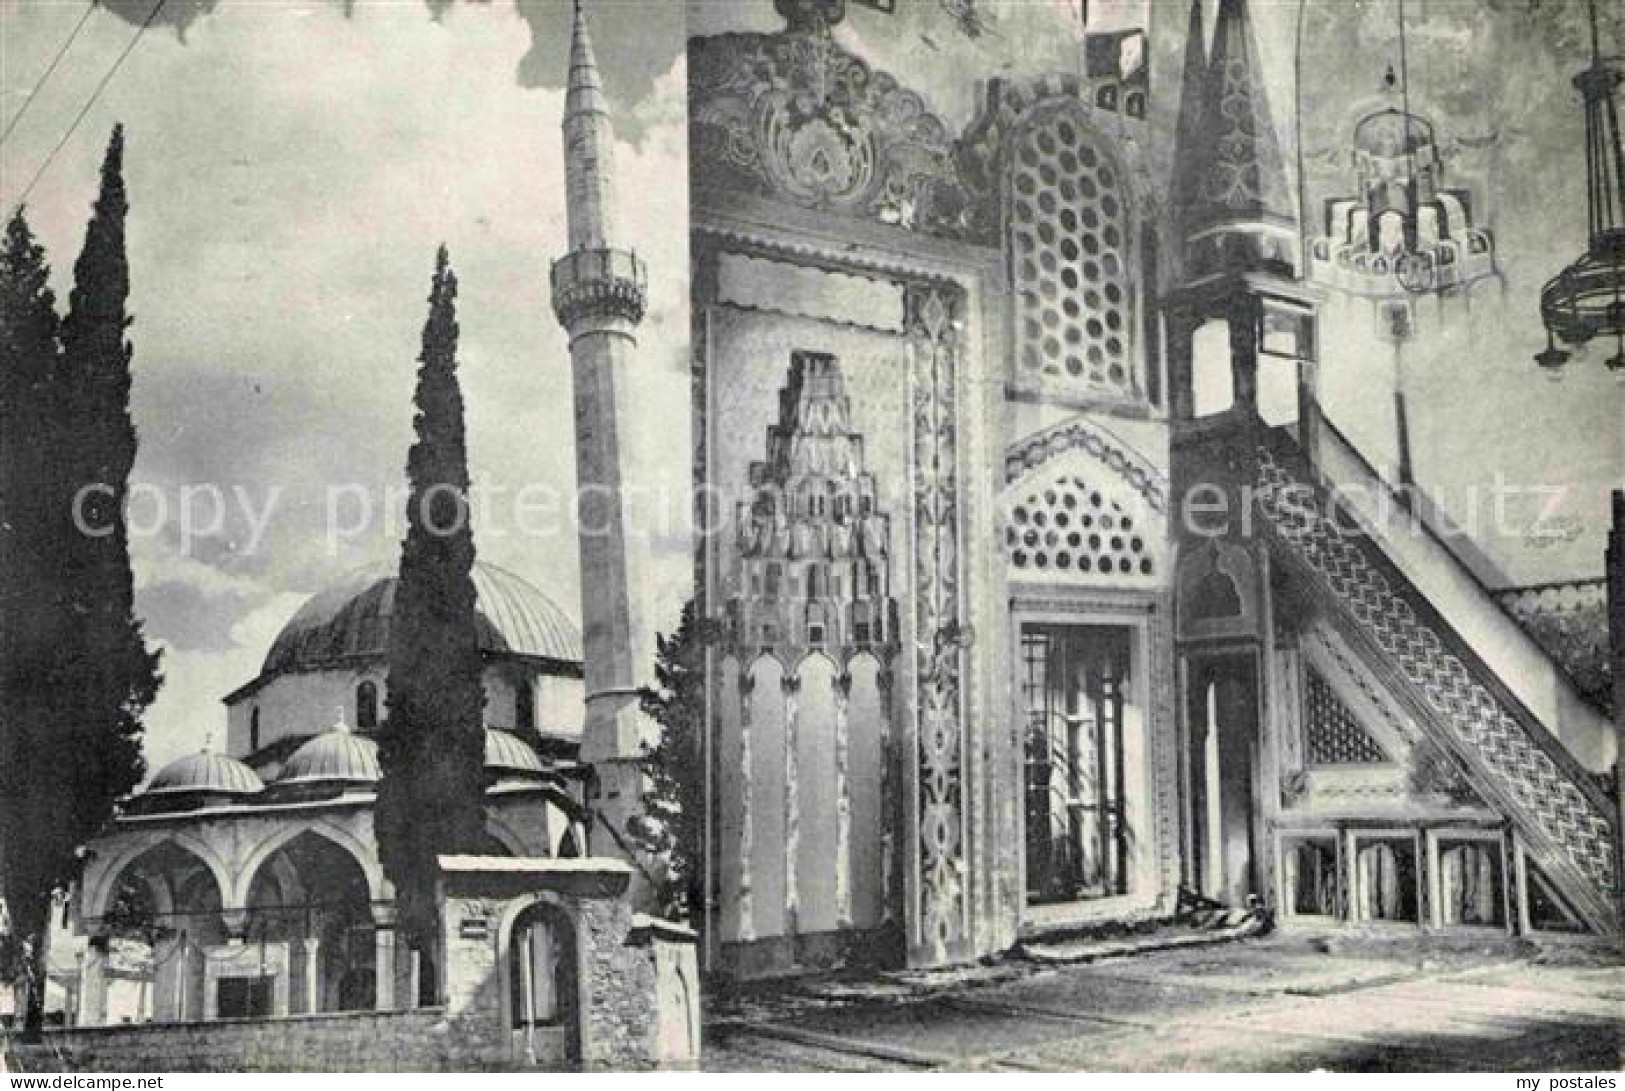 72764101 Mostar Moctap Moschee Des Kara Dozbeg 16. Jhdt. Mostar - Bosnie-Herzegovine